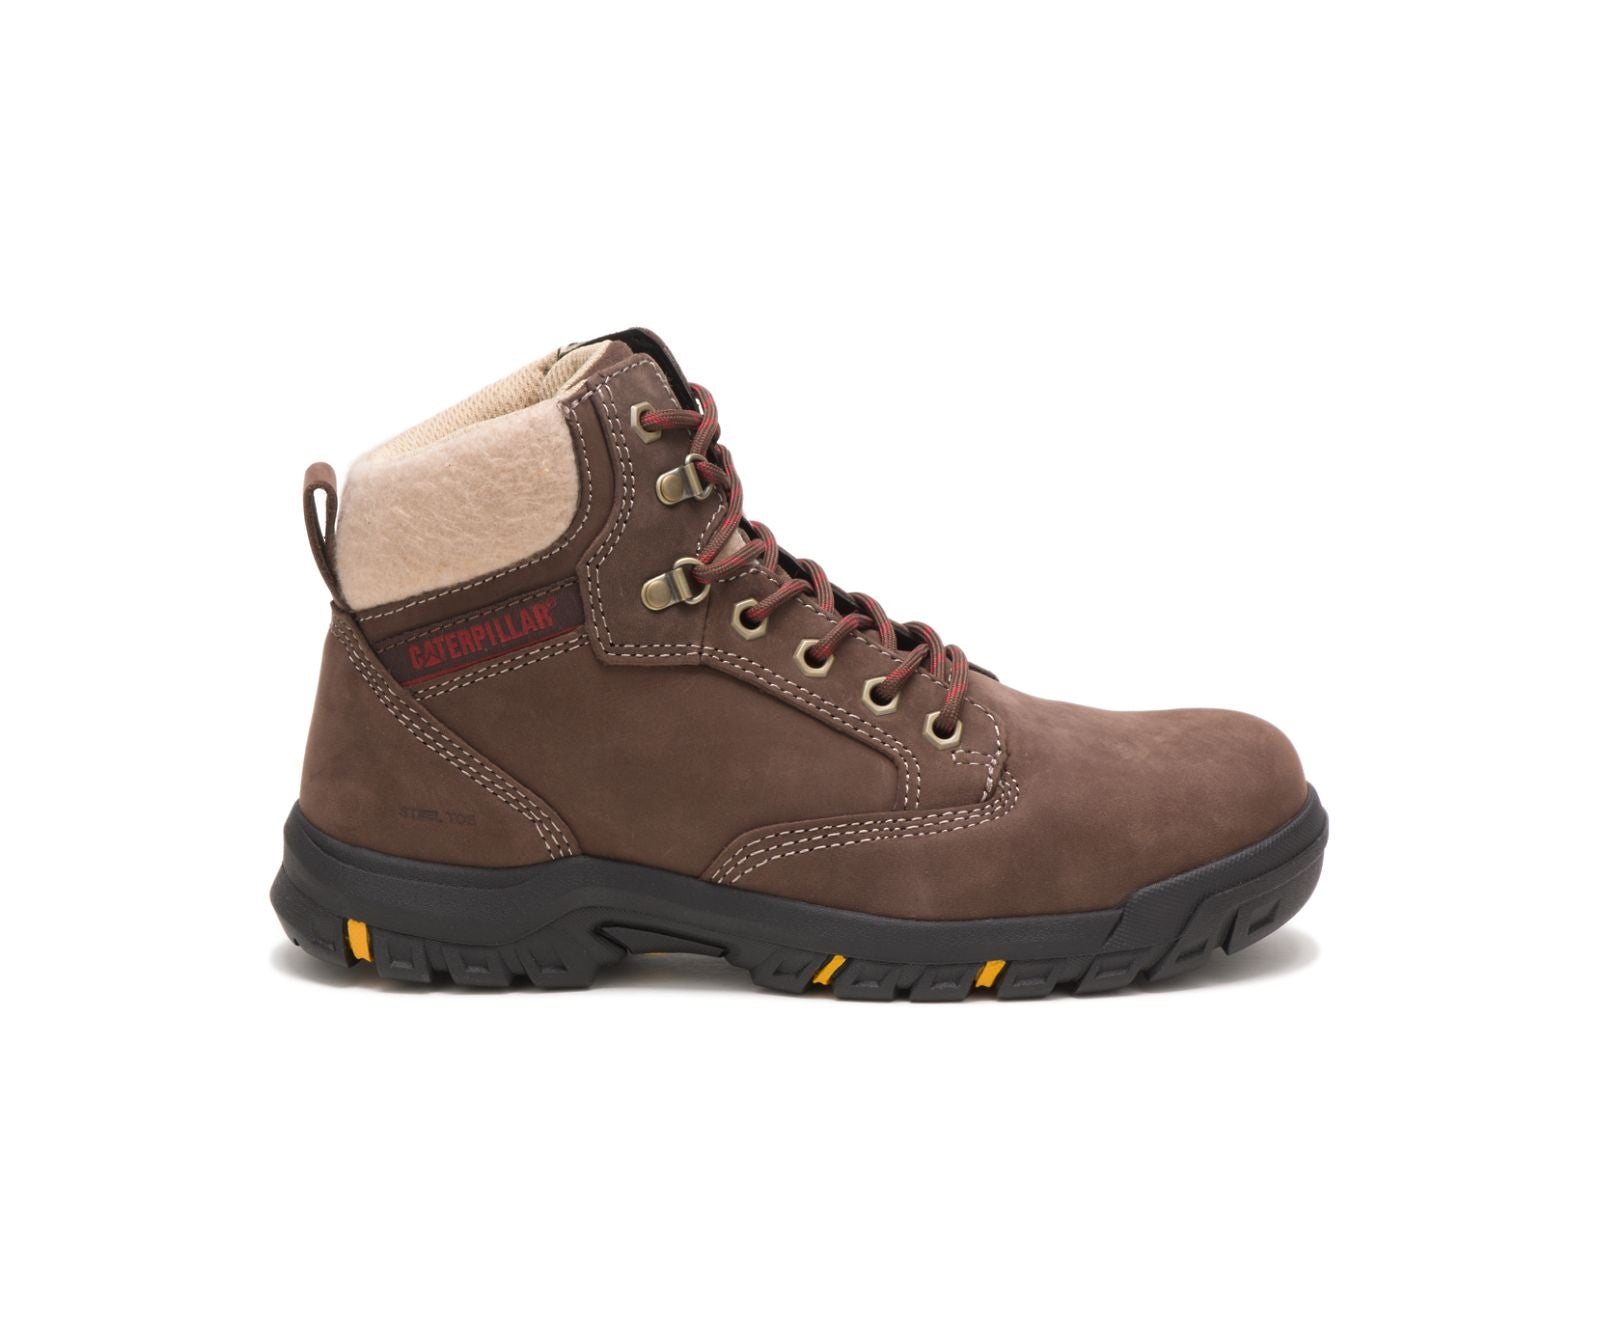 91007 Caterpillar 6 Inch Steel Toe Boot (brown)